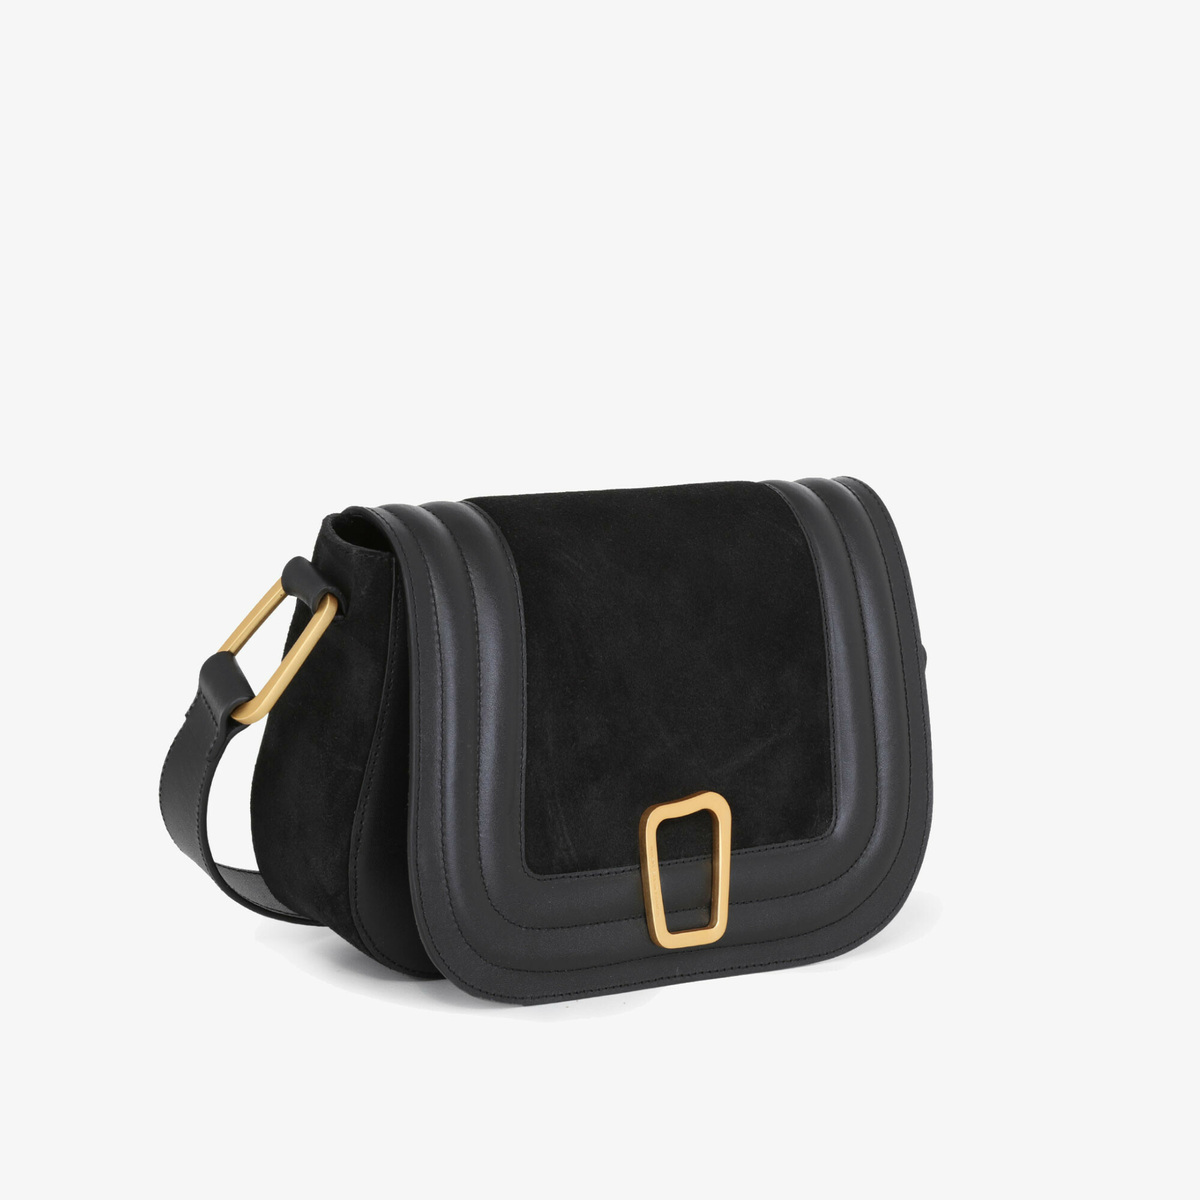 Shoulder bag Barth, City Black - W23 x H16 x D7 cm - 100% leather  - image 4